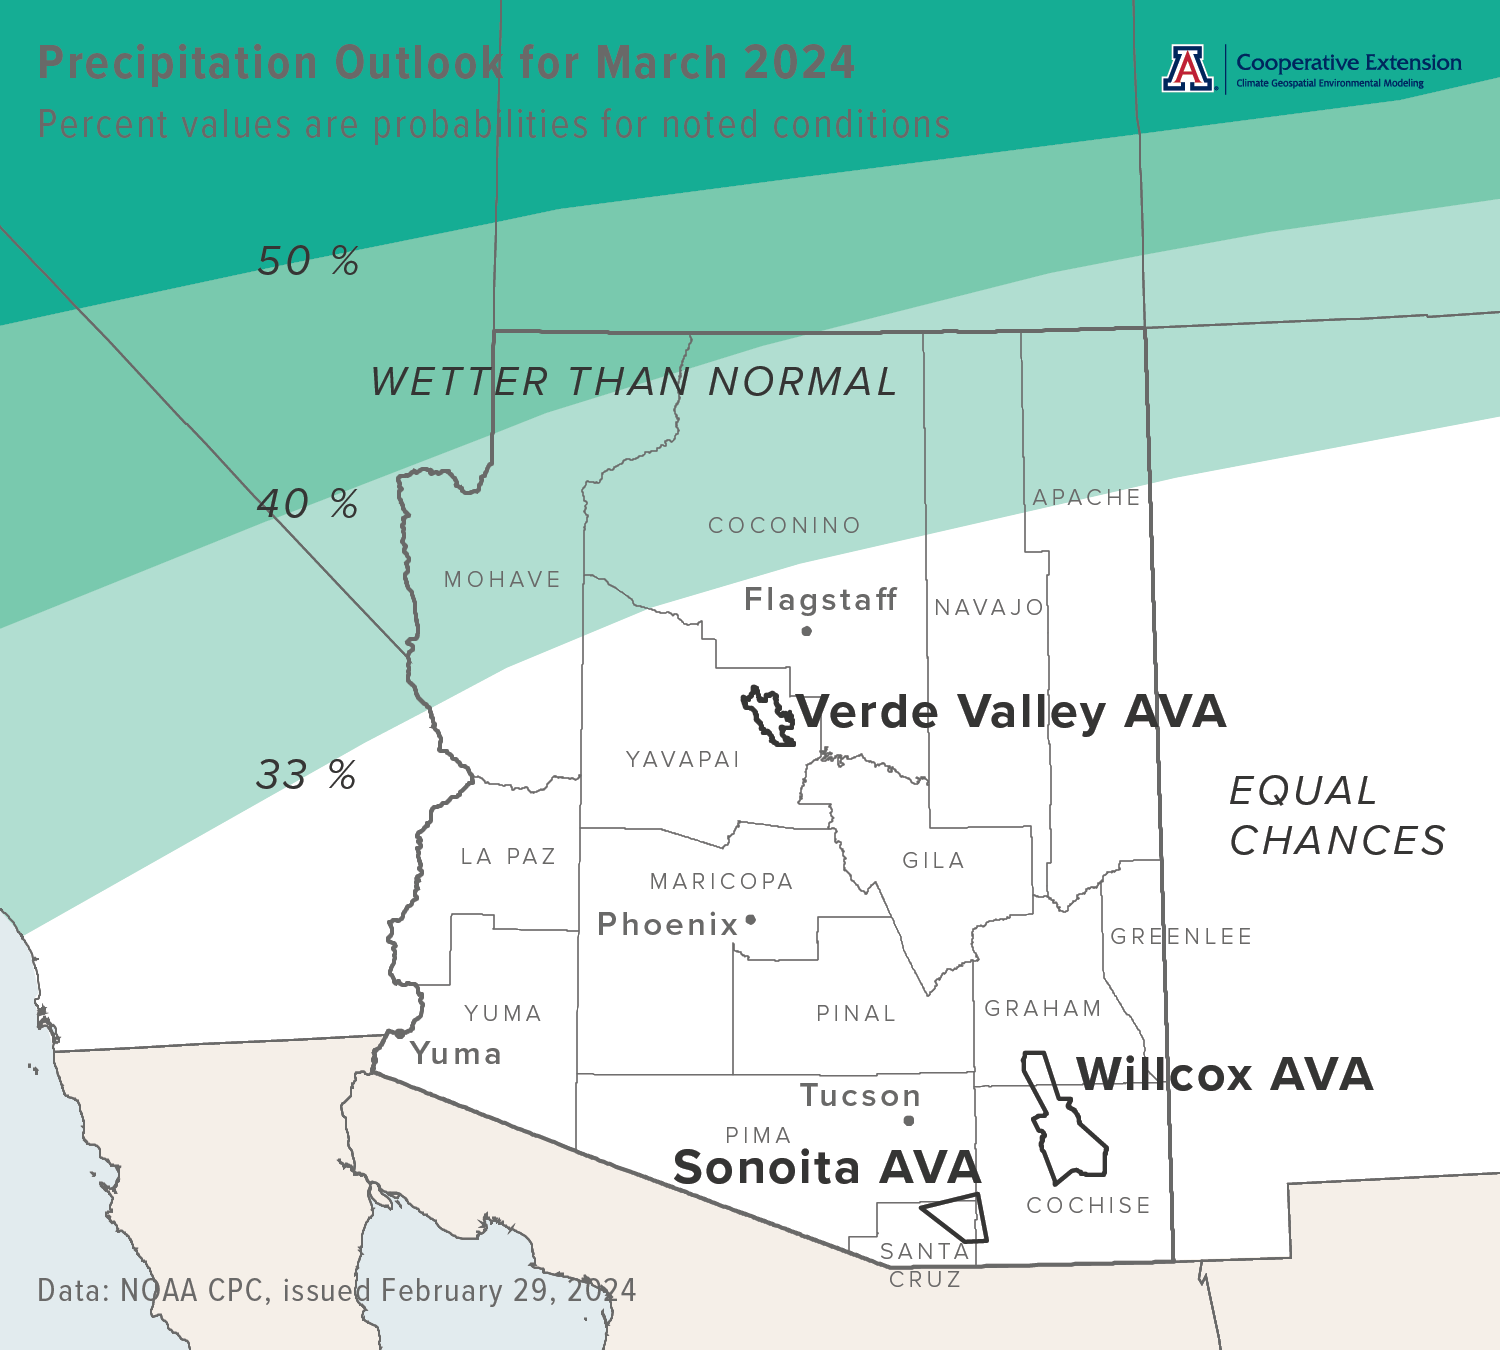 March 2024 precipitation outlook map for Arizona